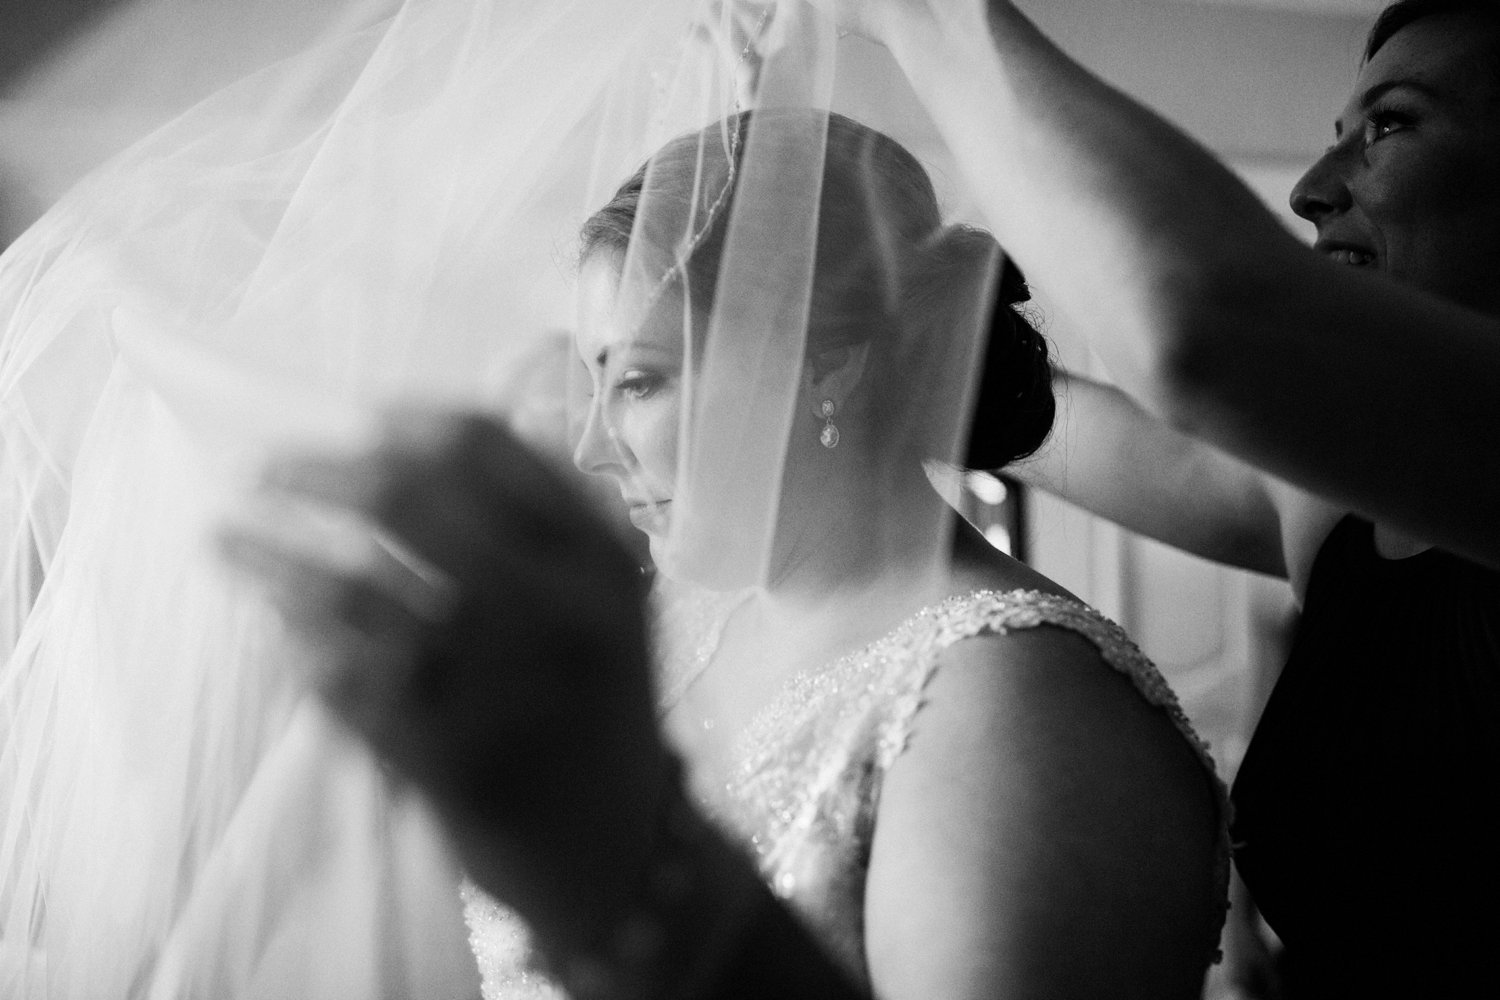  images by feliciathephotographer.com | destination wedding photographer | spring time | carriage club | exclusive | pre ceremony | getting ready | details | veil | black and white | bridesmaids | davids bridal | contrast | natural light | 